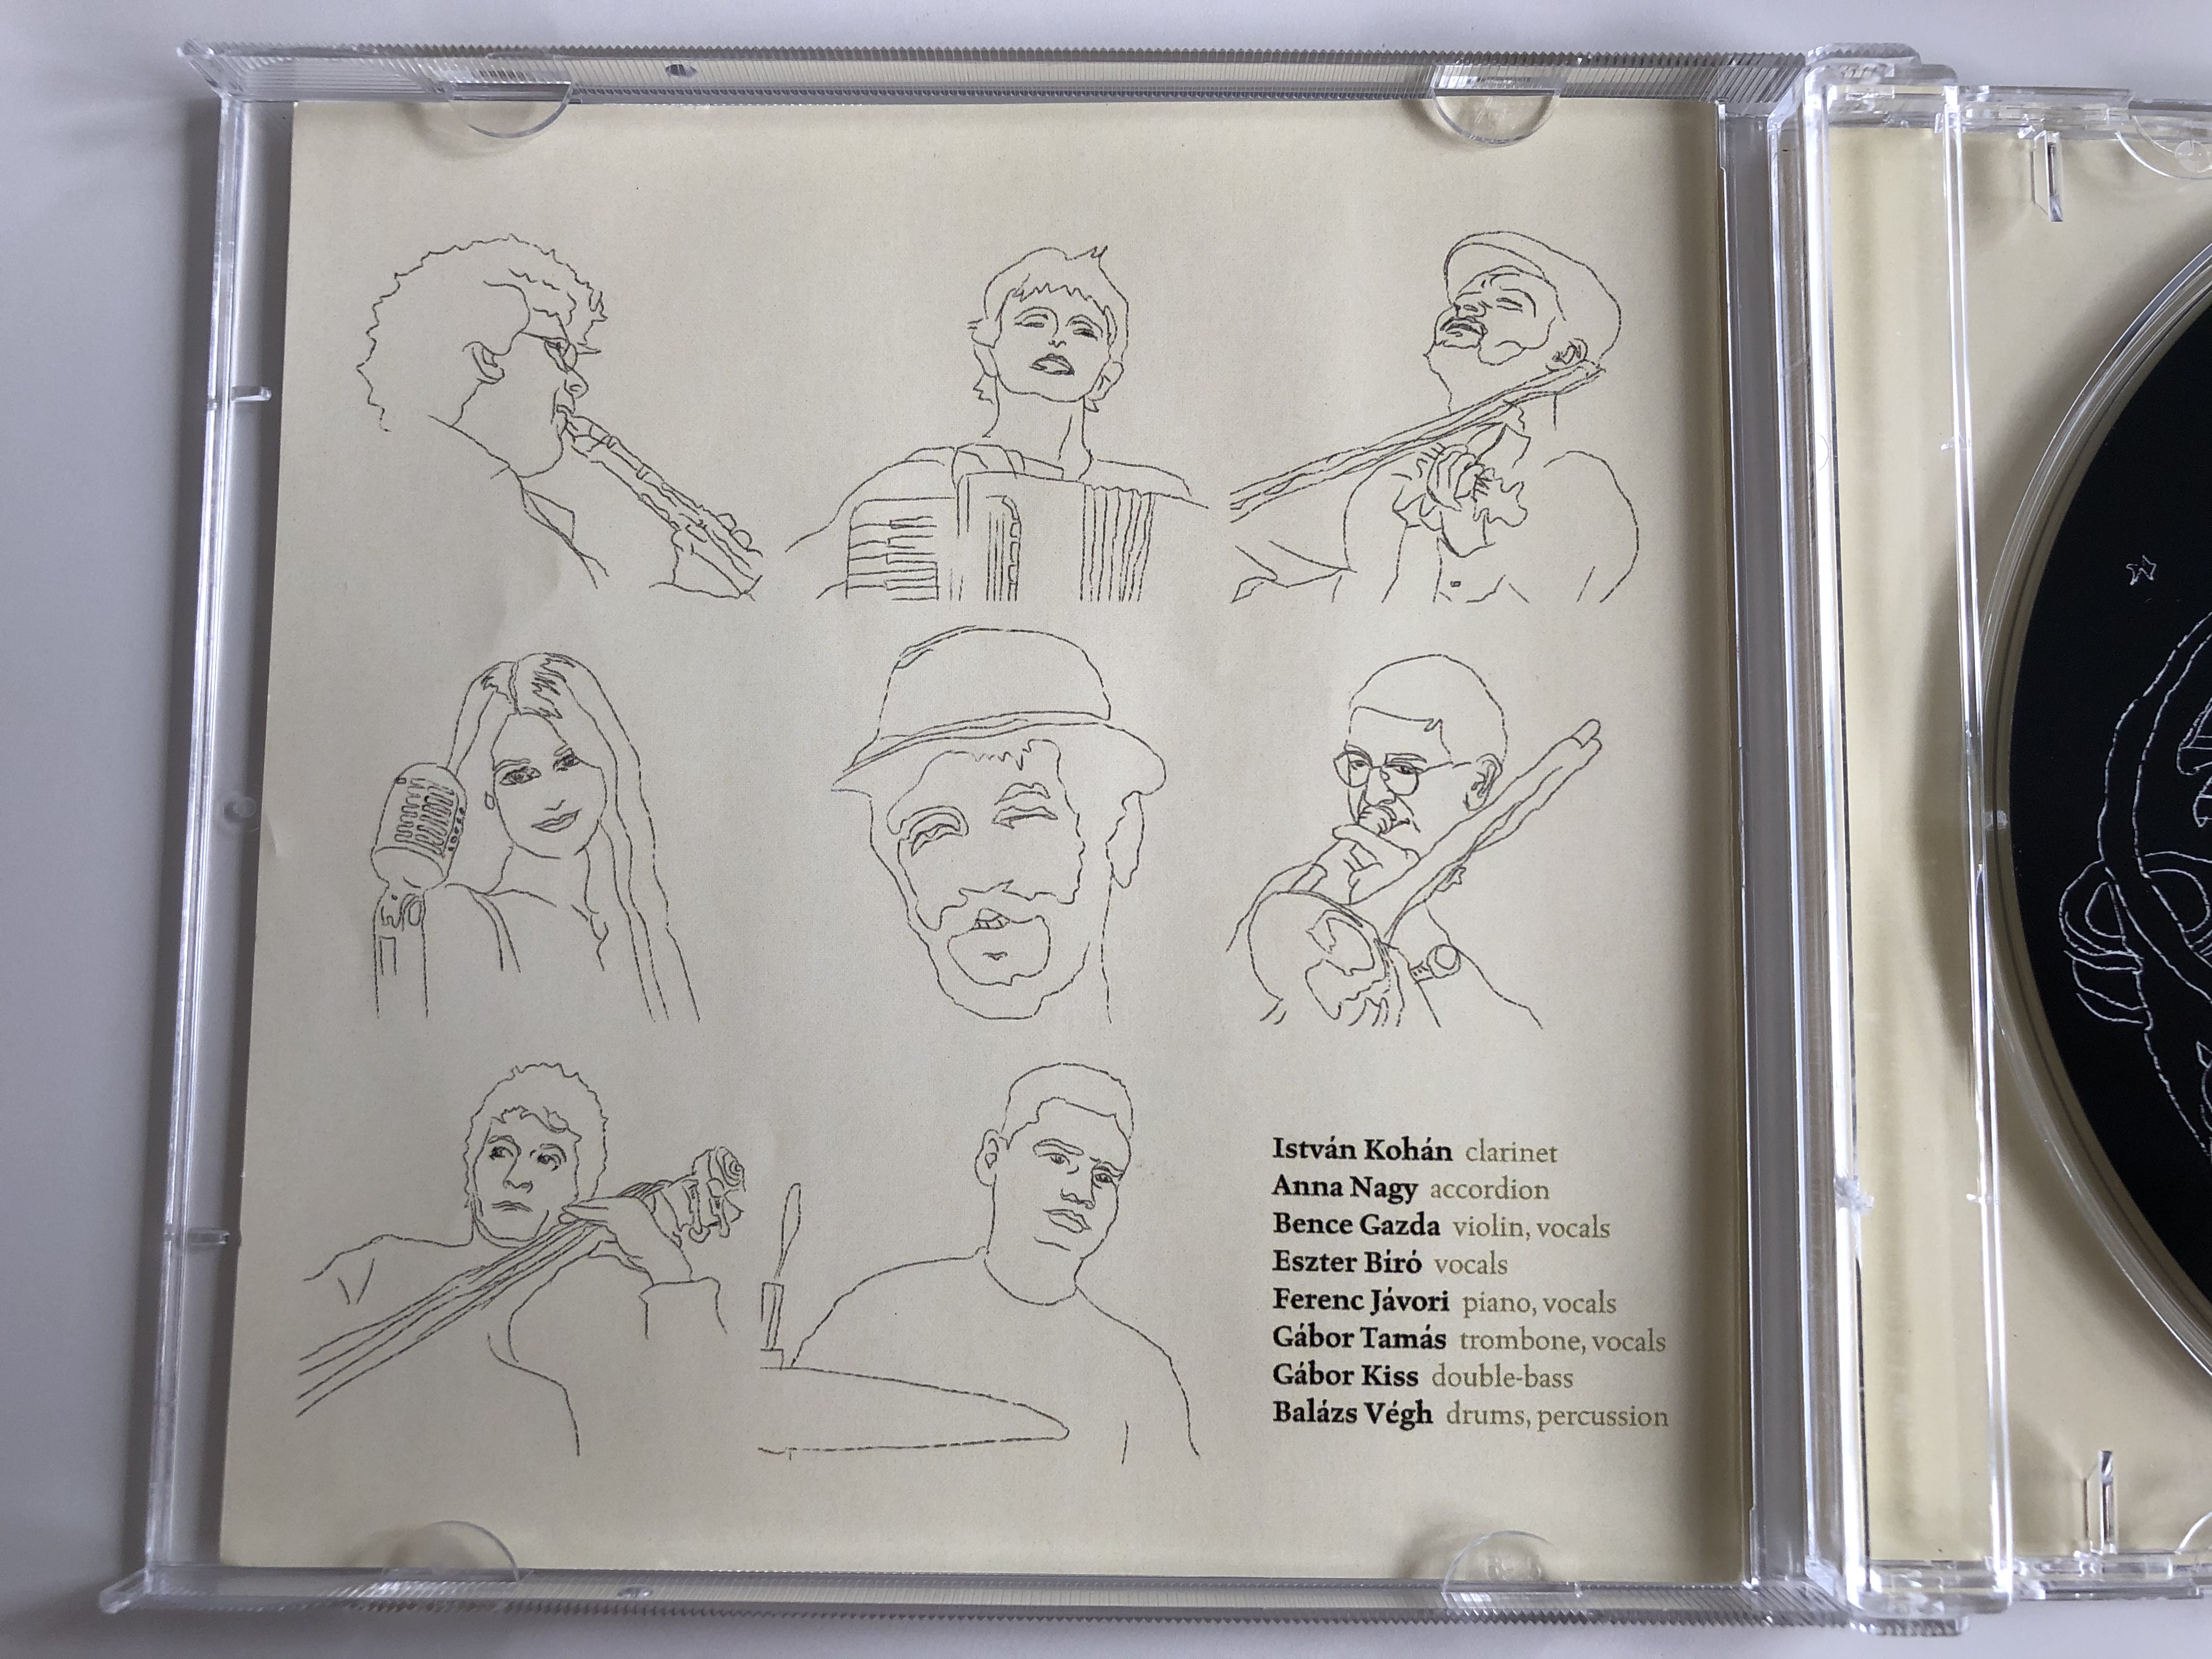 budapest-klezmer-band-le-chajem-rebbe-hungaroton-classic-audio-cd-hcd-18277-2-.jpg